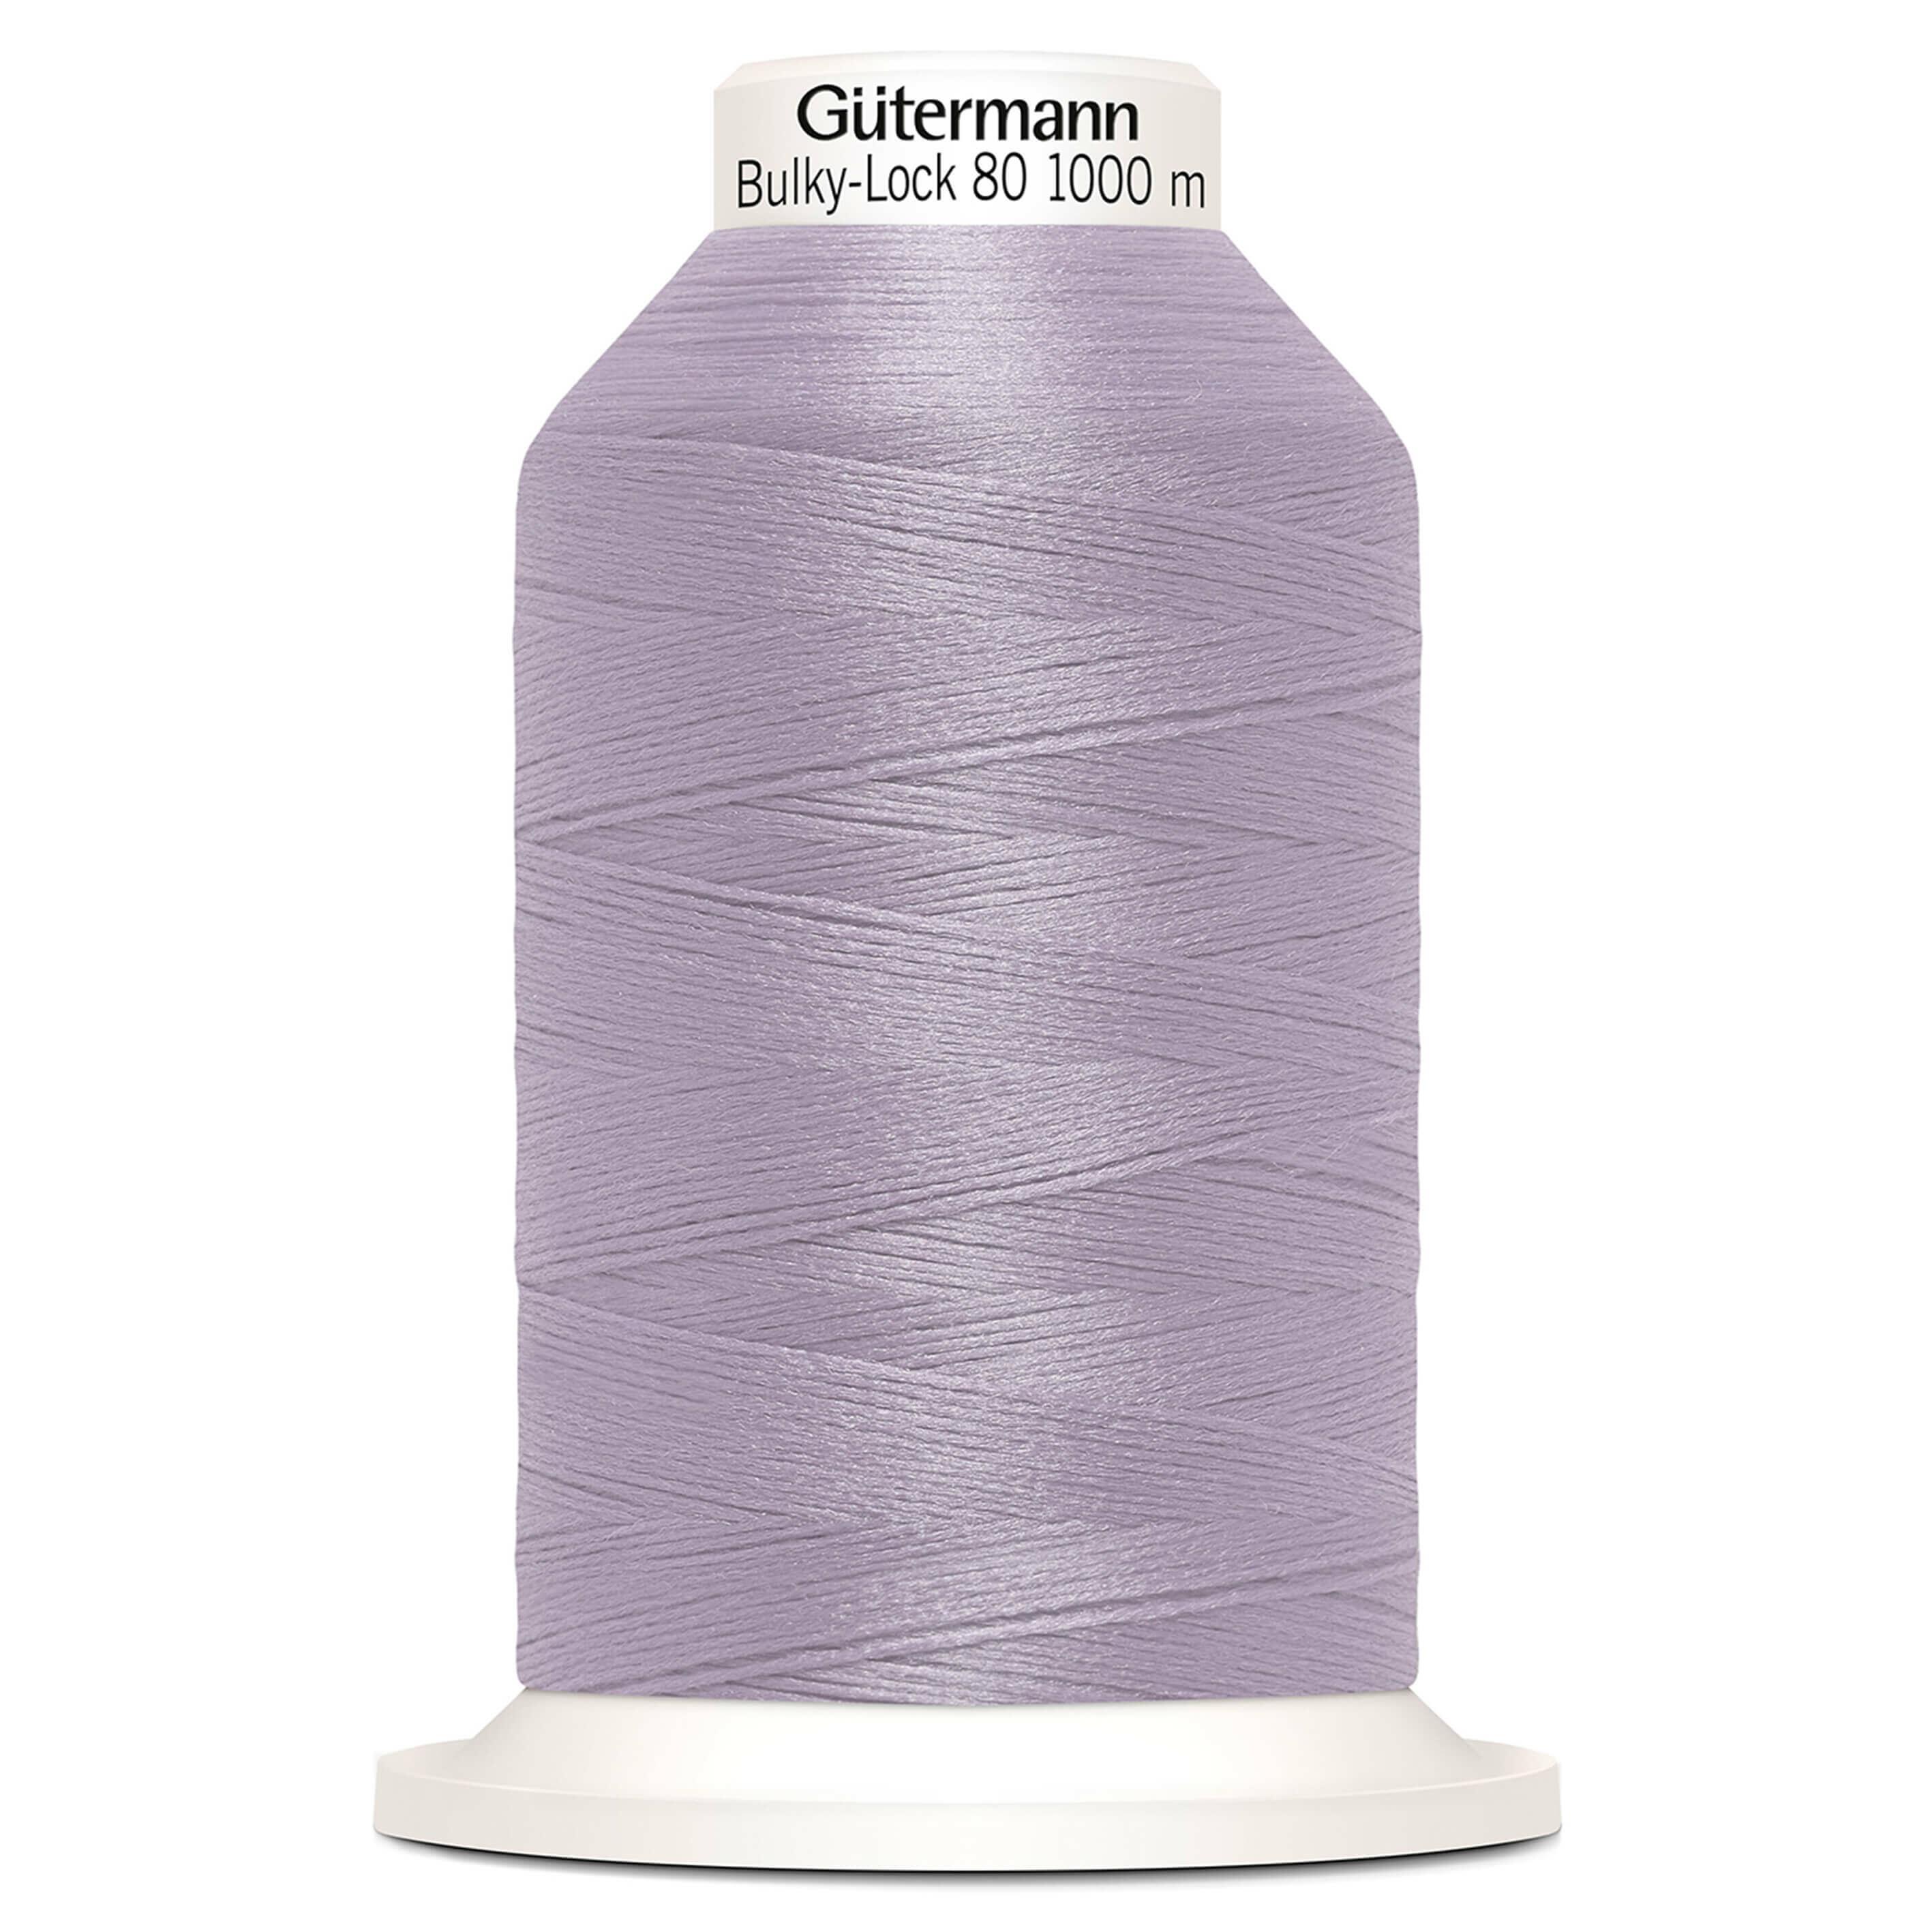 Gutermann Bulky Lock 80 overlocking thread in colour 158 African Violet